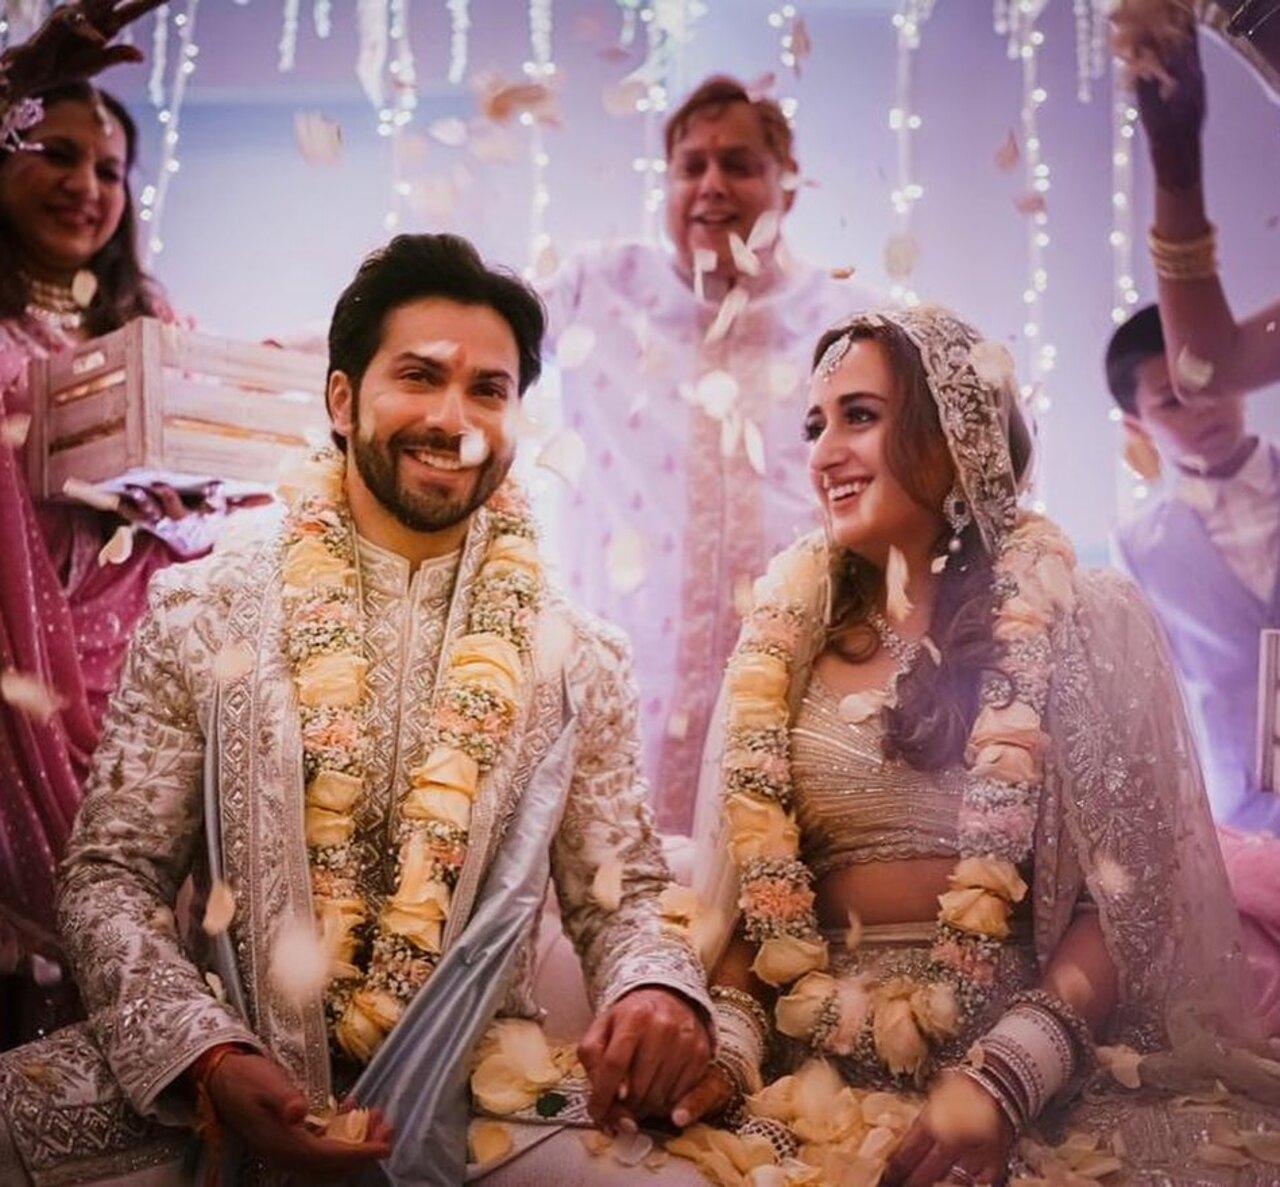 Varun Dhawan's bride, fashion designer Natasha Dalal, opted for a pastel embroidered lehenga for the big fat Punjabi wedding